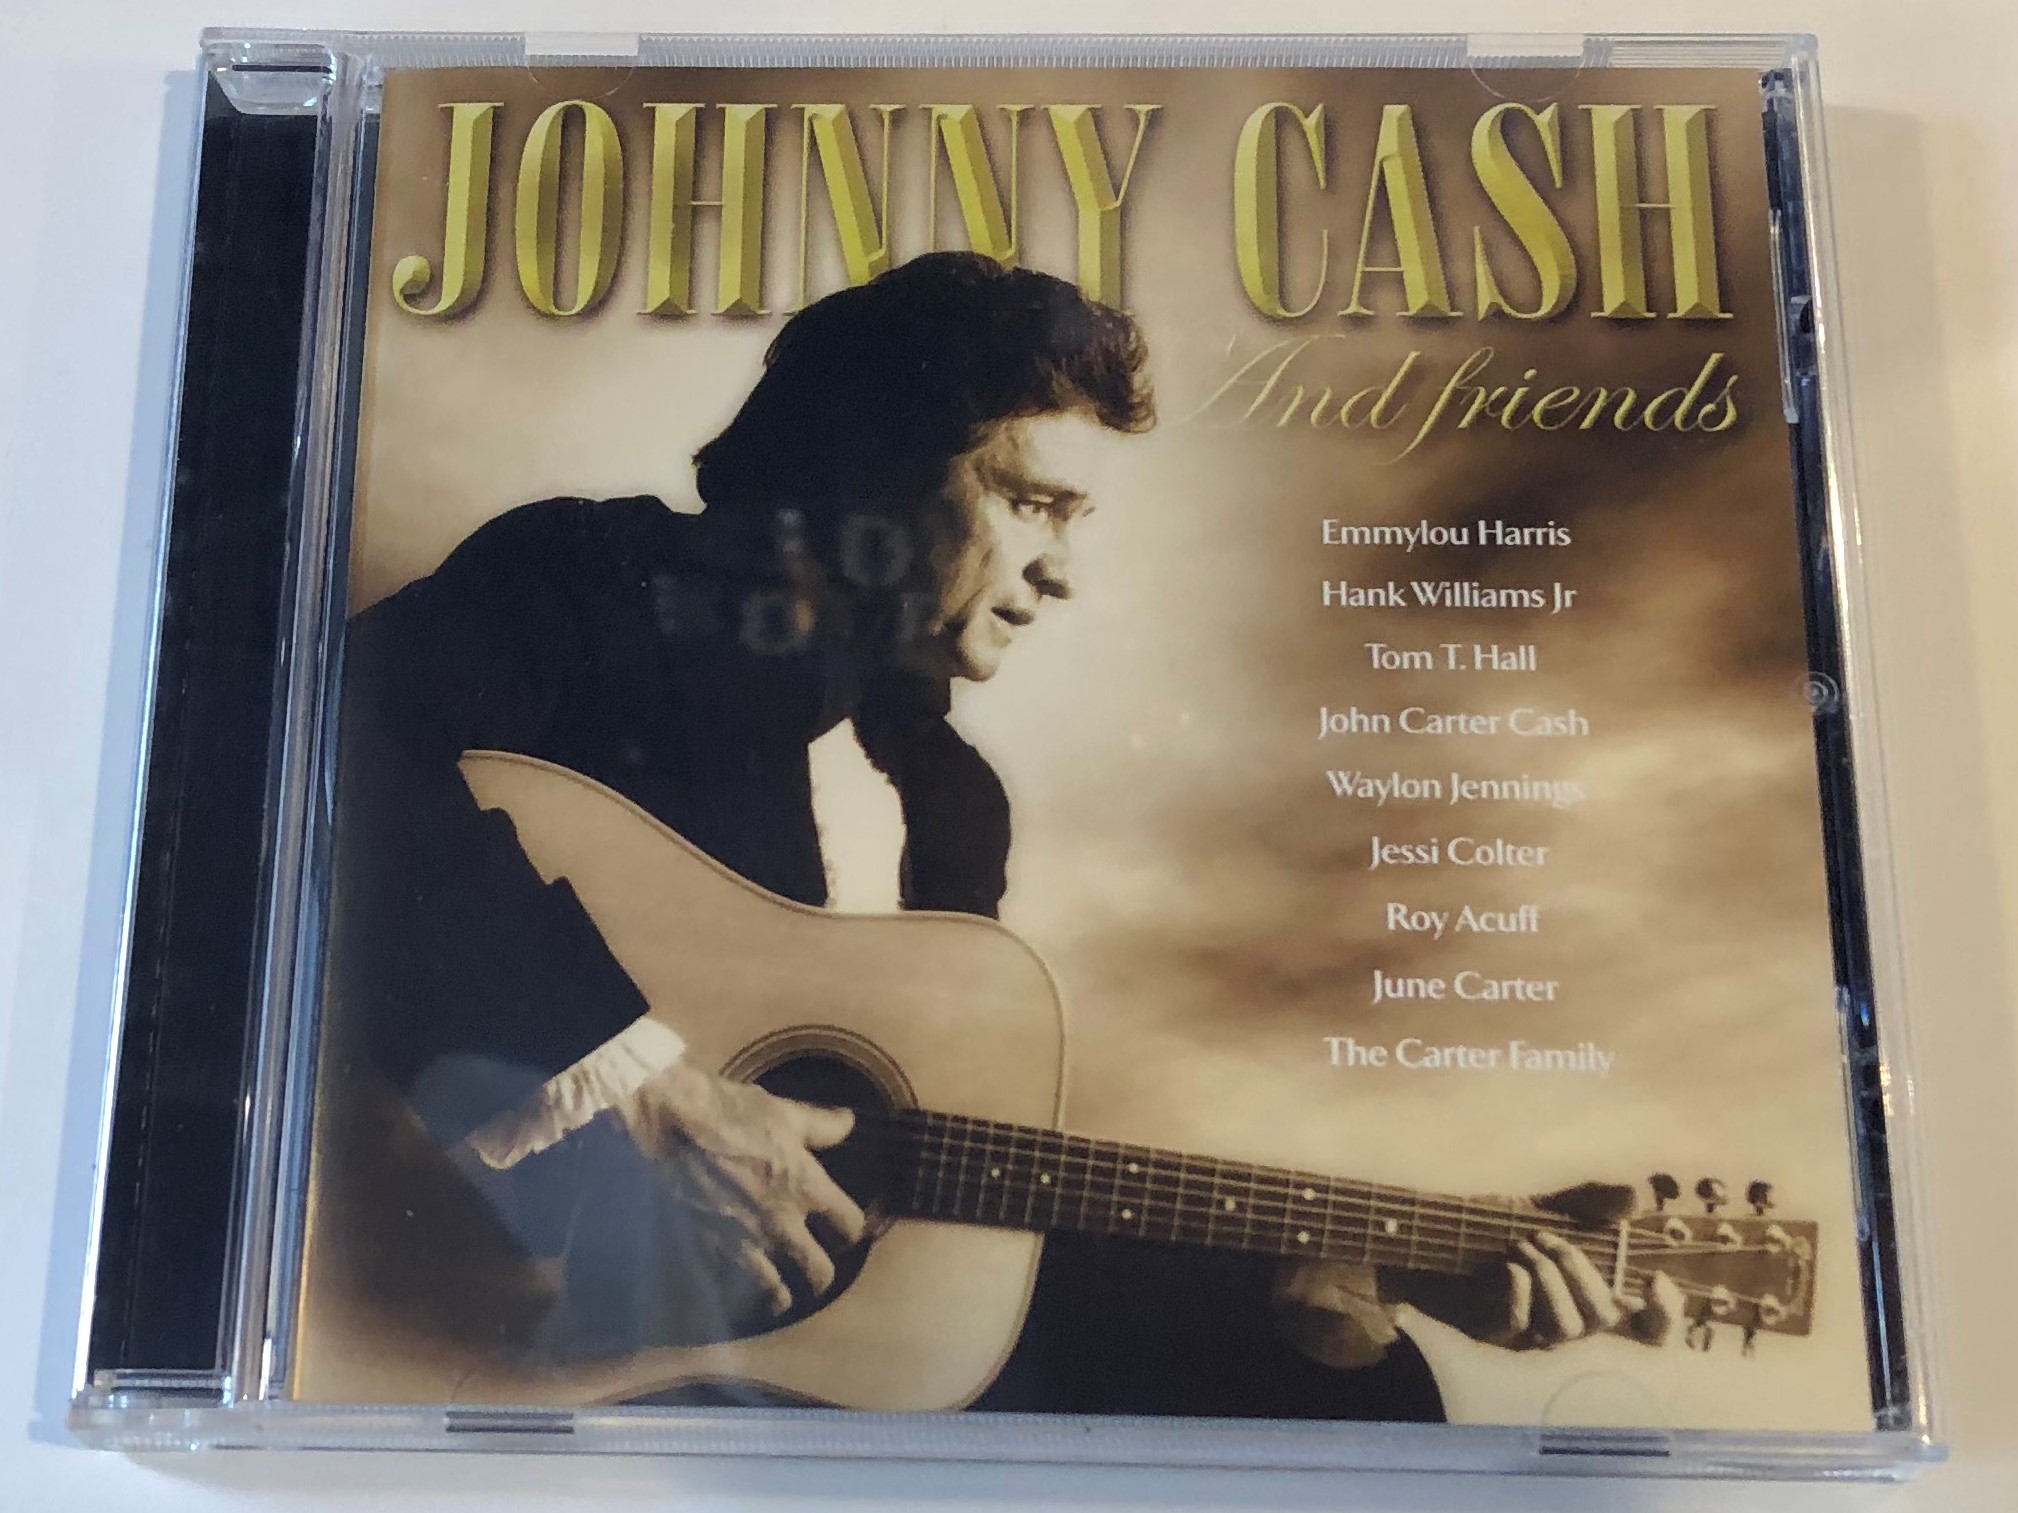 johnny-cash-and-friends-emmylou-harris-hank-williams-jr.-tom-t.-hall-john-carter-cash-waylon-jennings-jessi-colter-roy-acuff-june-carter-the-carter-family-spectrum-music-audio-cd-2002-5-1-.jpg